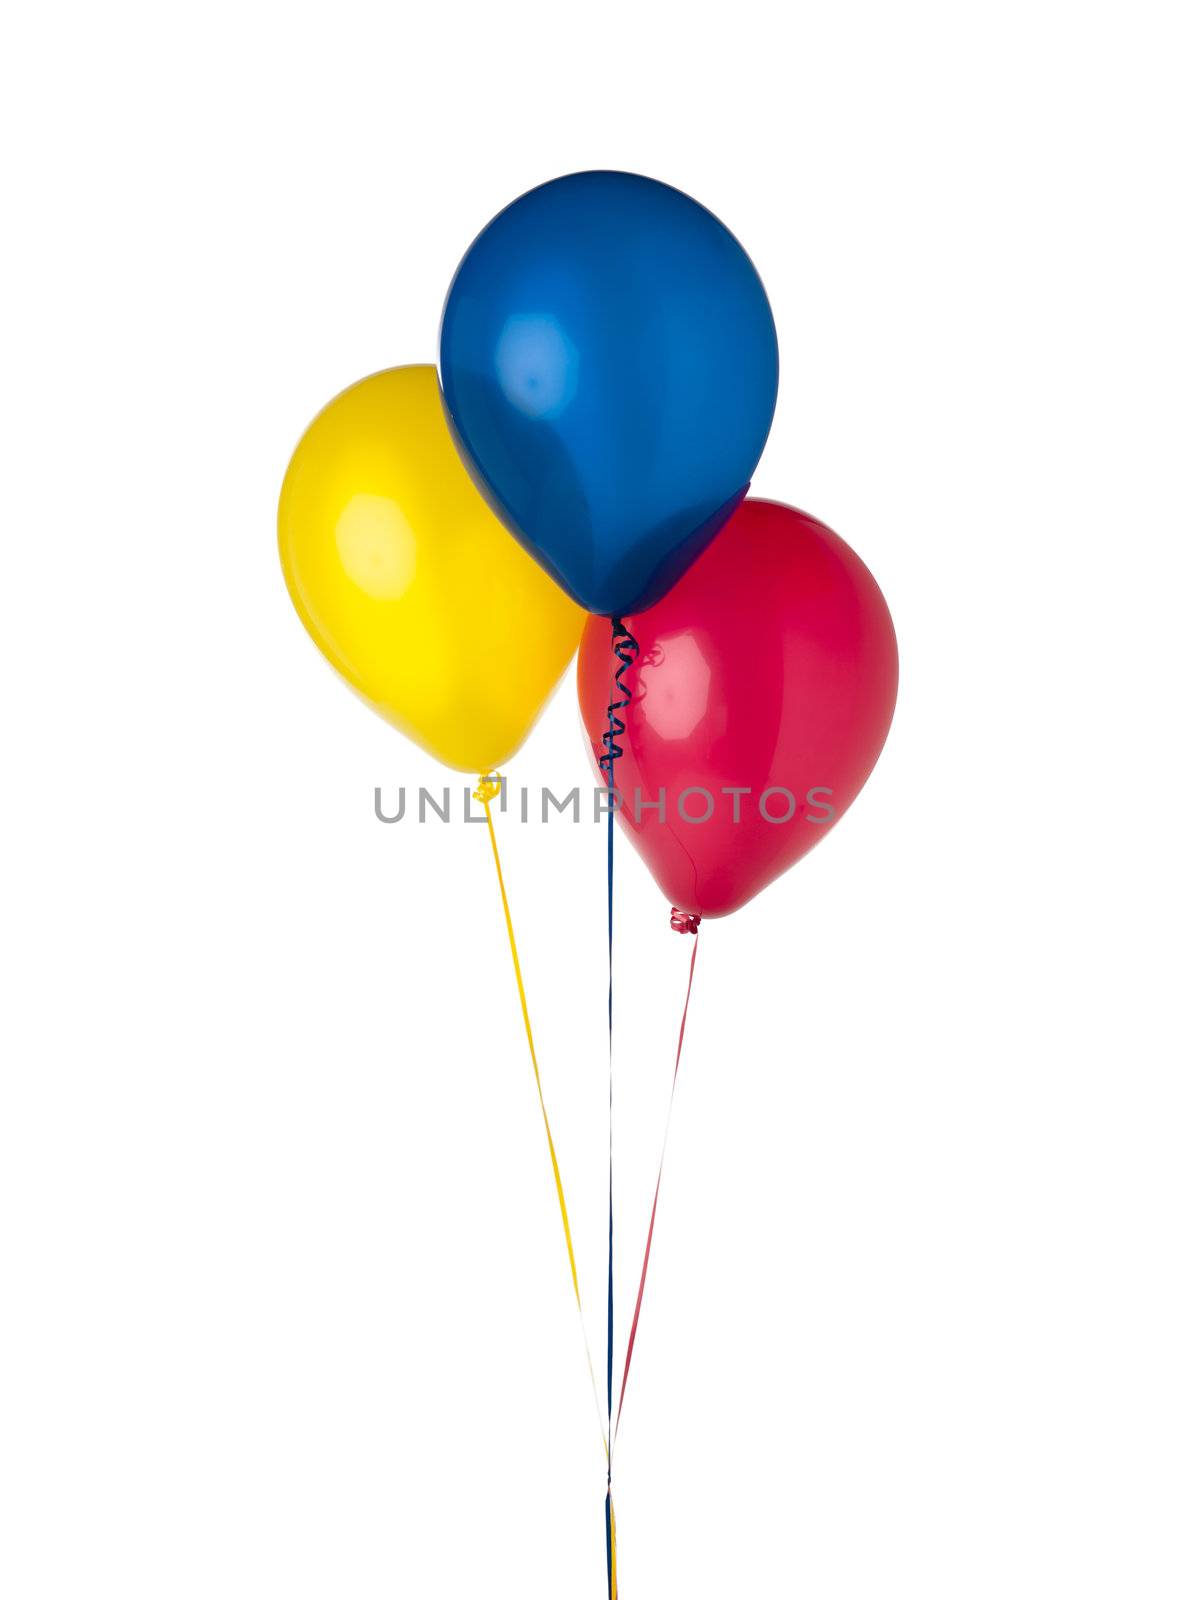 balloons on white background by kozzi